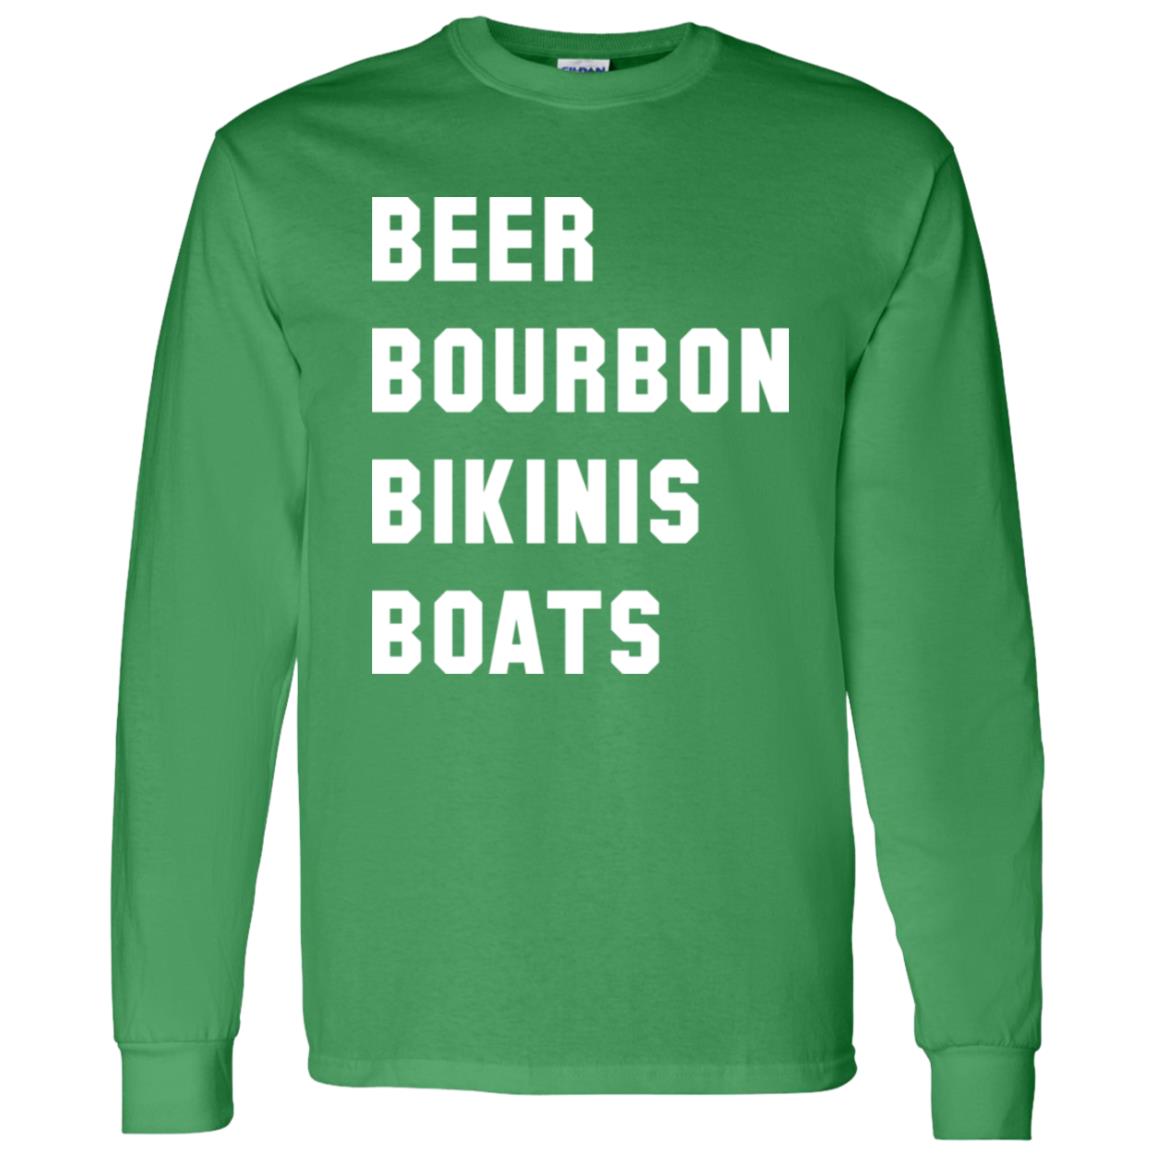 HRCL FL - Beer Bourbon Bikinis Boats - 2 Sided G540 LS T-Shirt 5.3 oz.